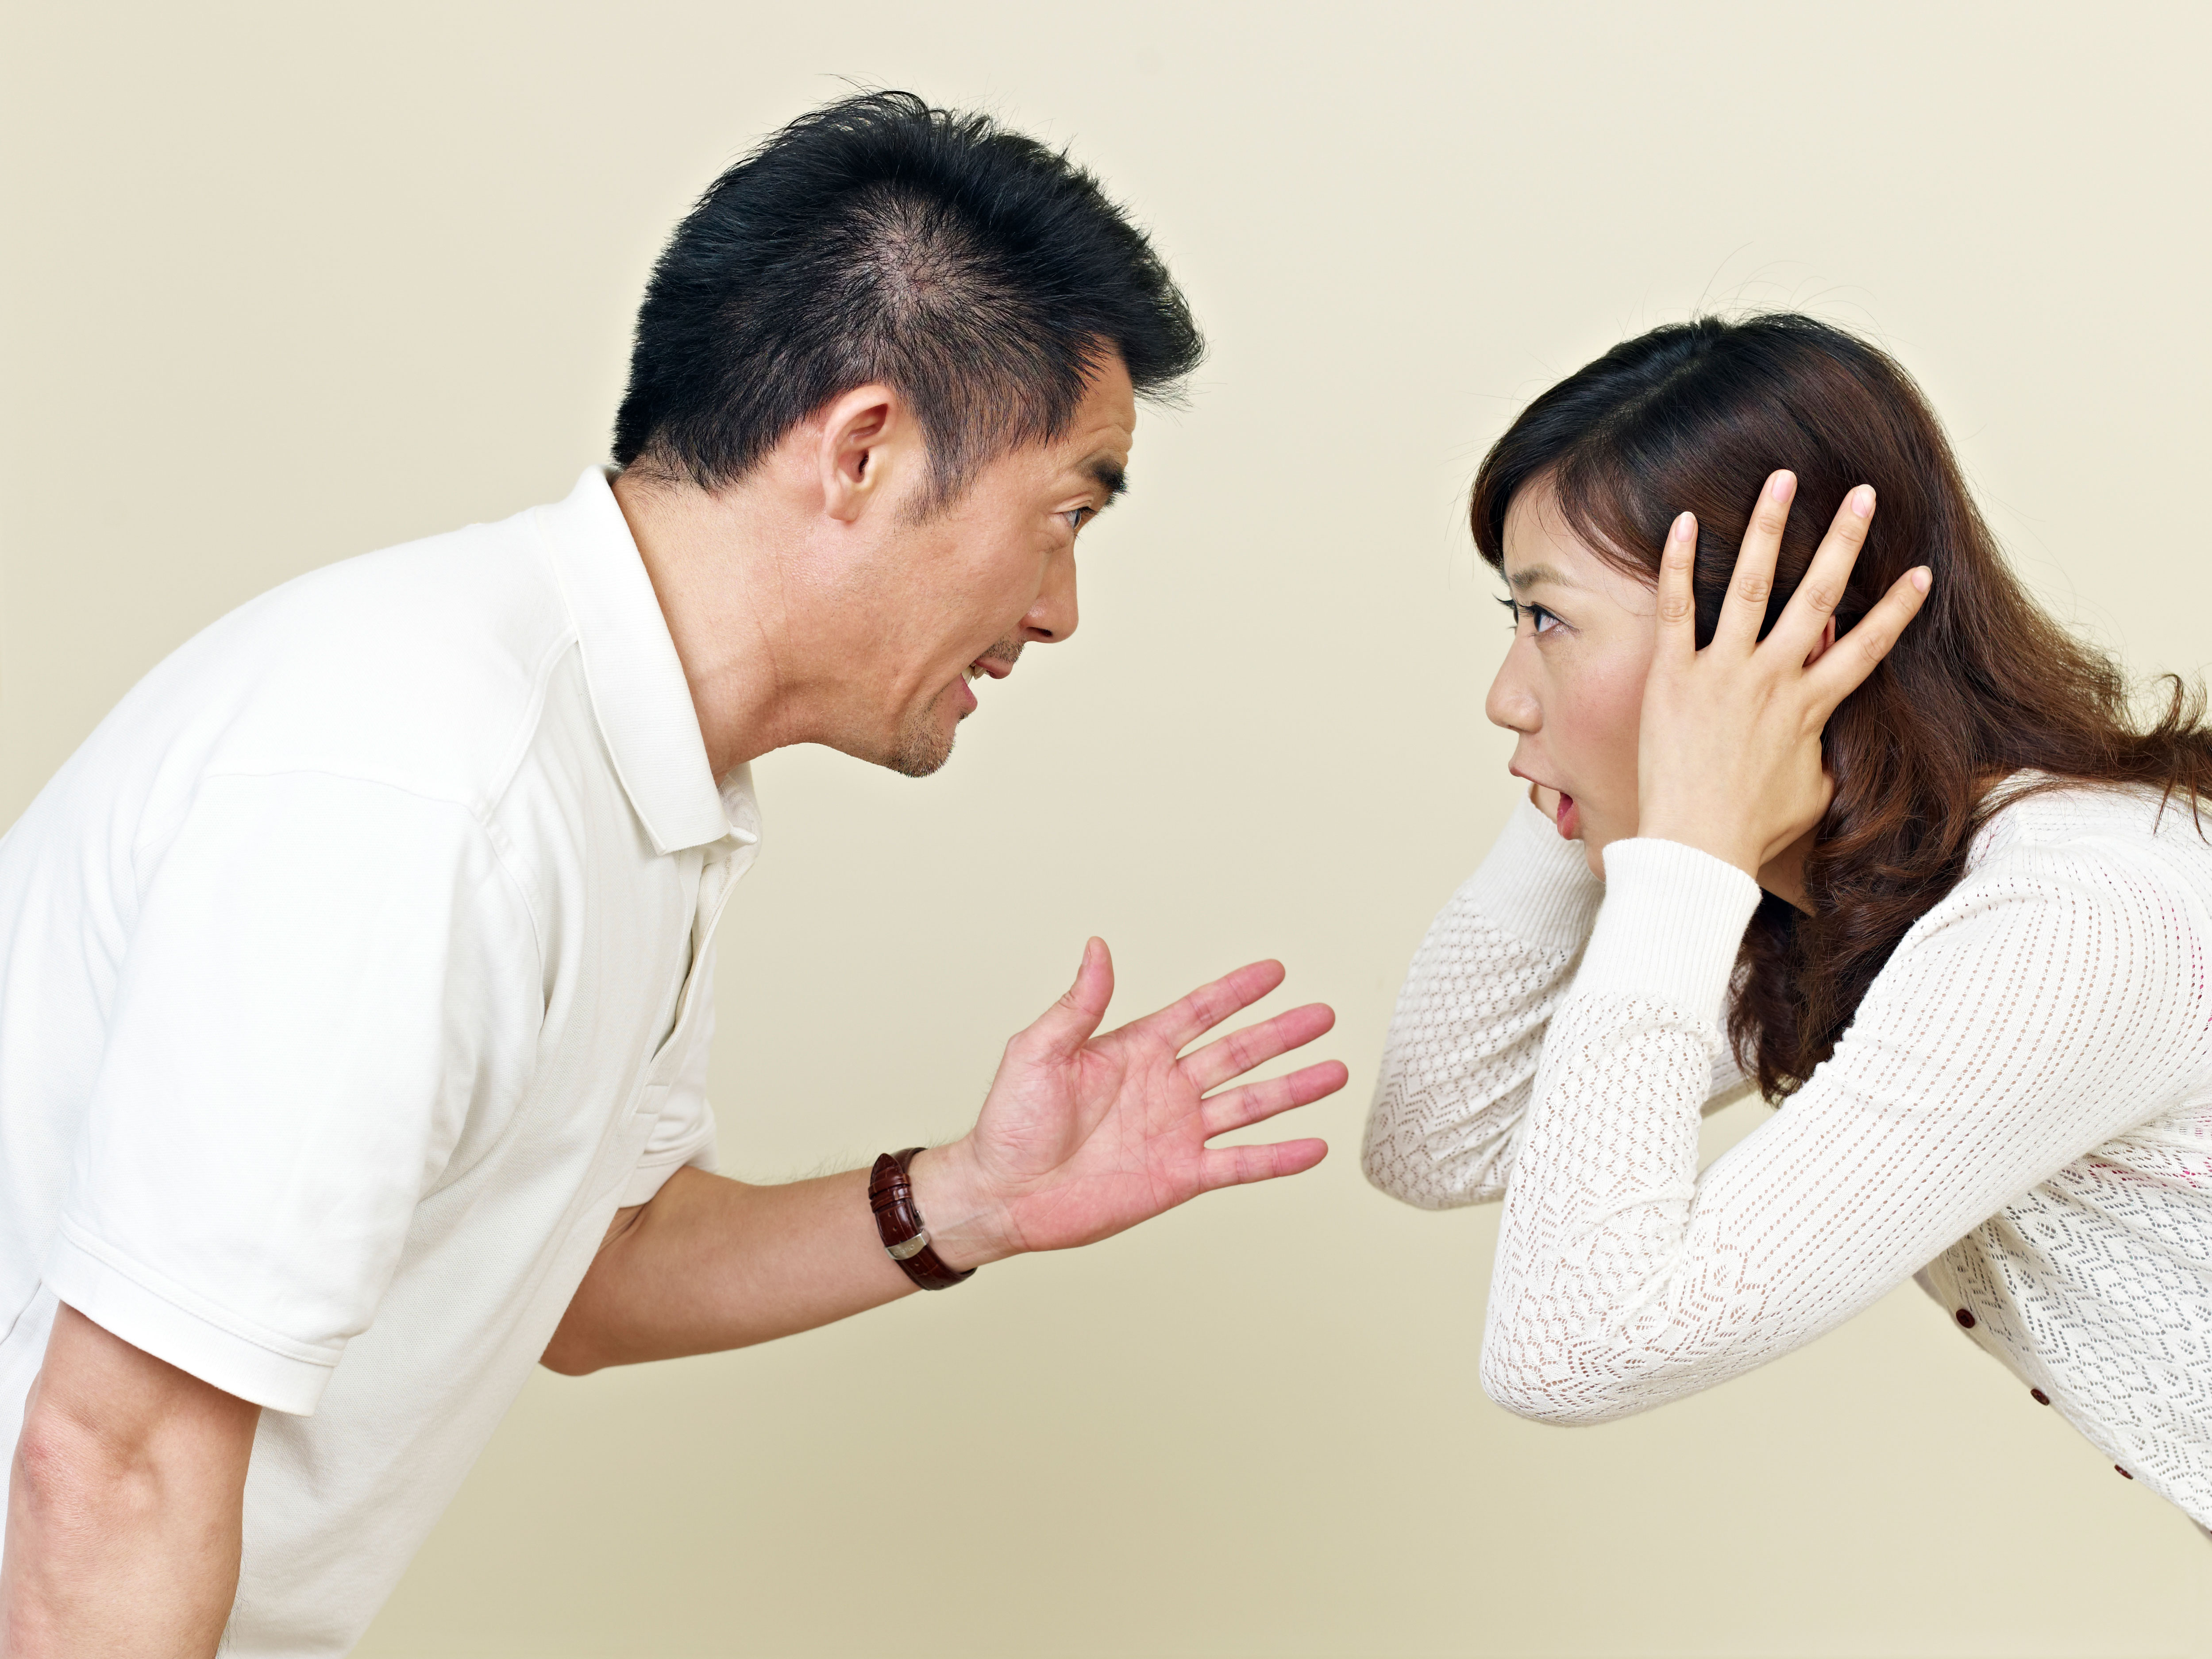 Жена с азиатами. Ссора. Семейная ссора. Мужчина и женщина спорят. Плохие отношения.